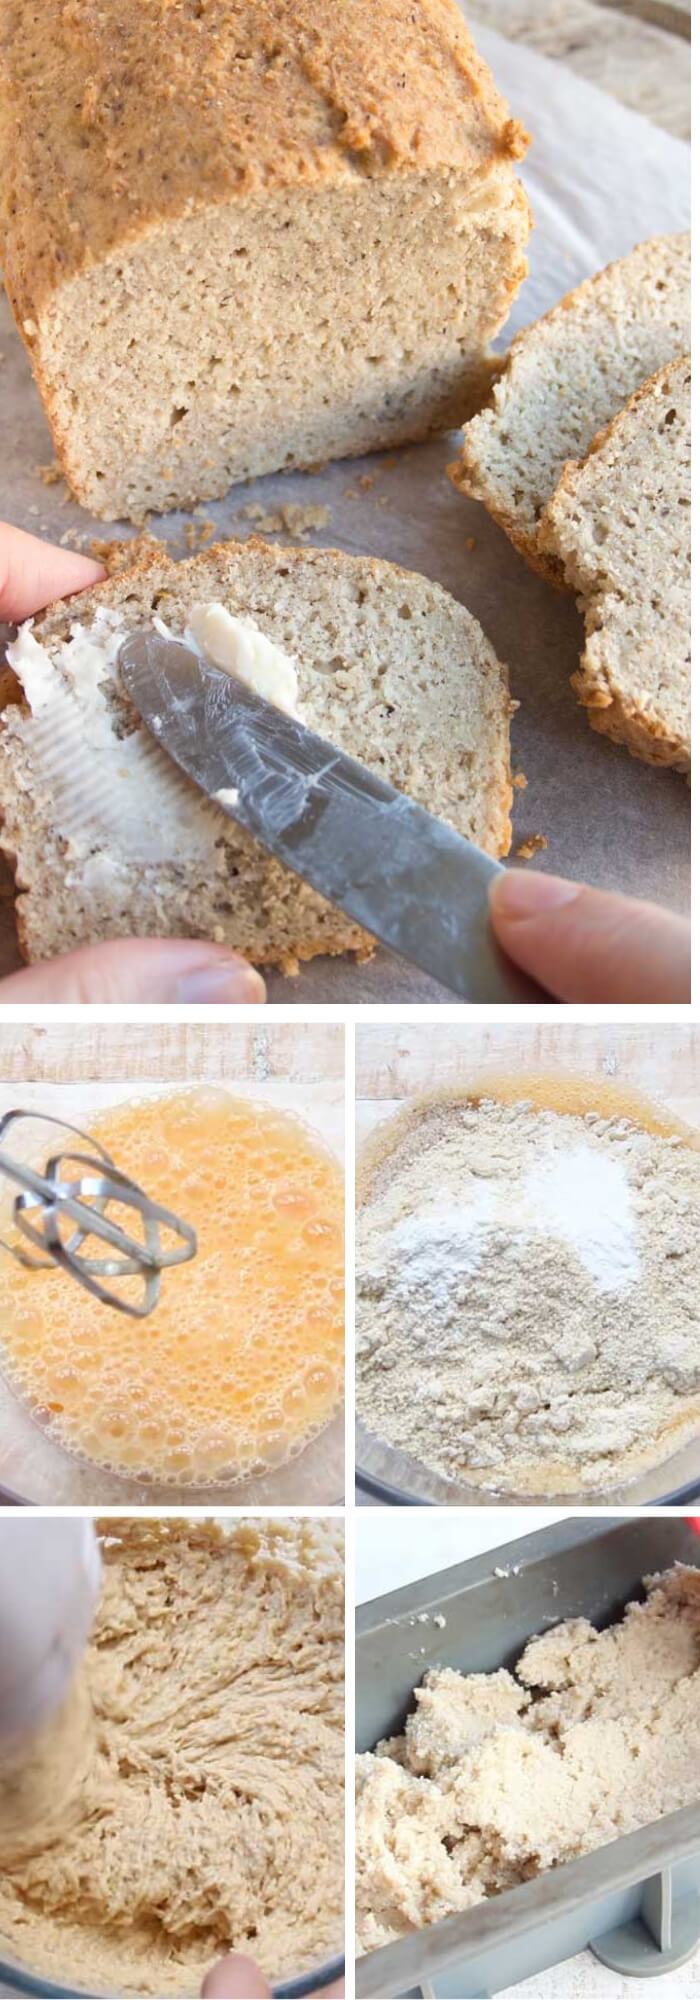 Keto Bread Almond Flour